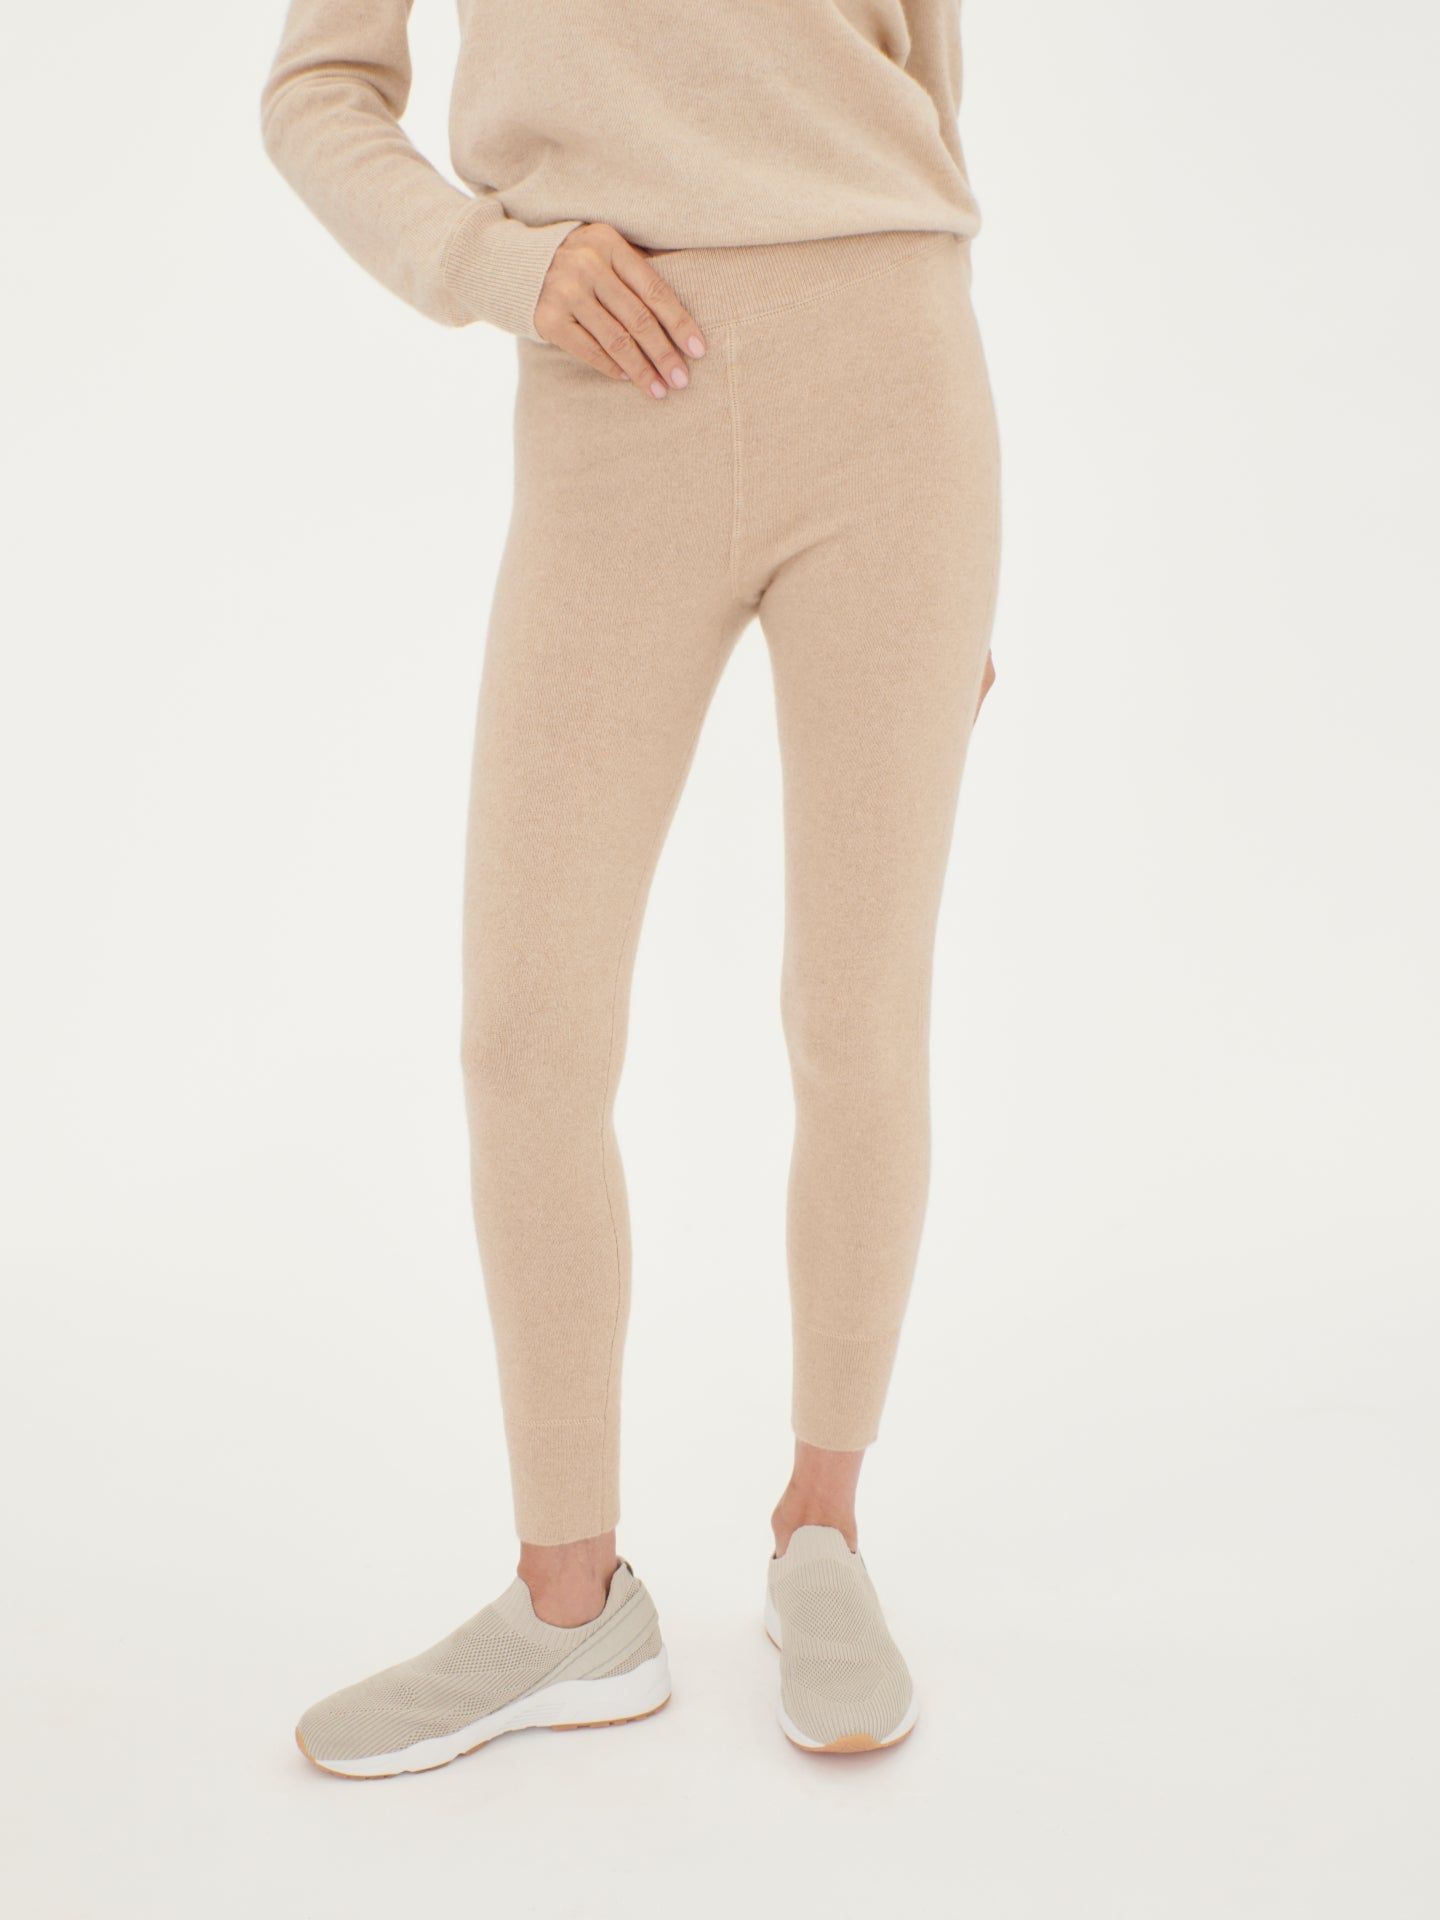 Women's Cashmere Tight-Fit Leggings Beige - Gobi Cashmere